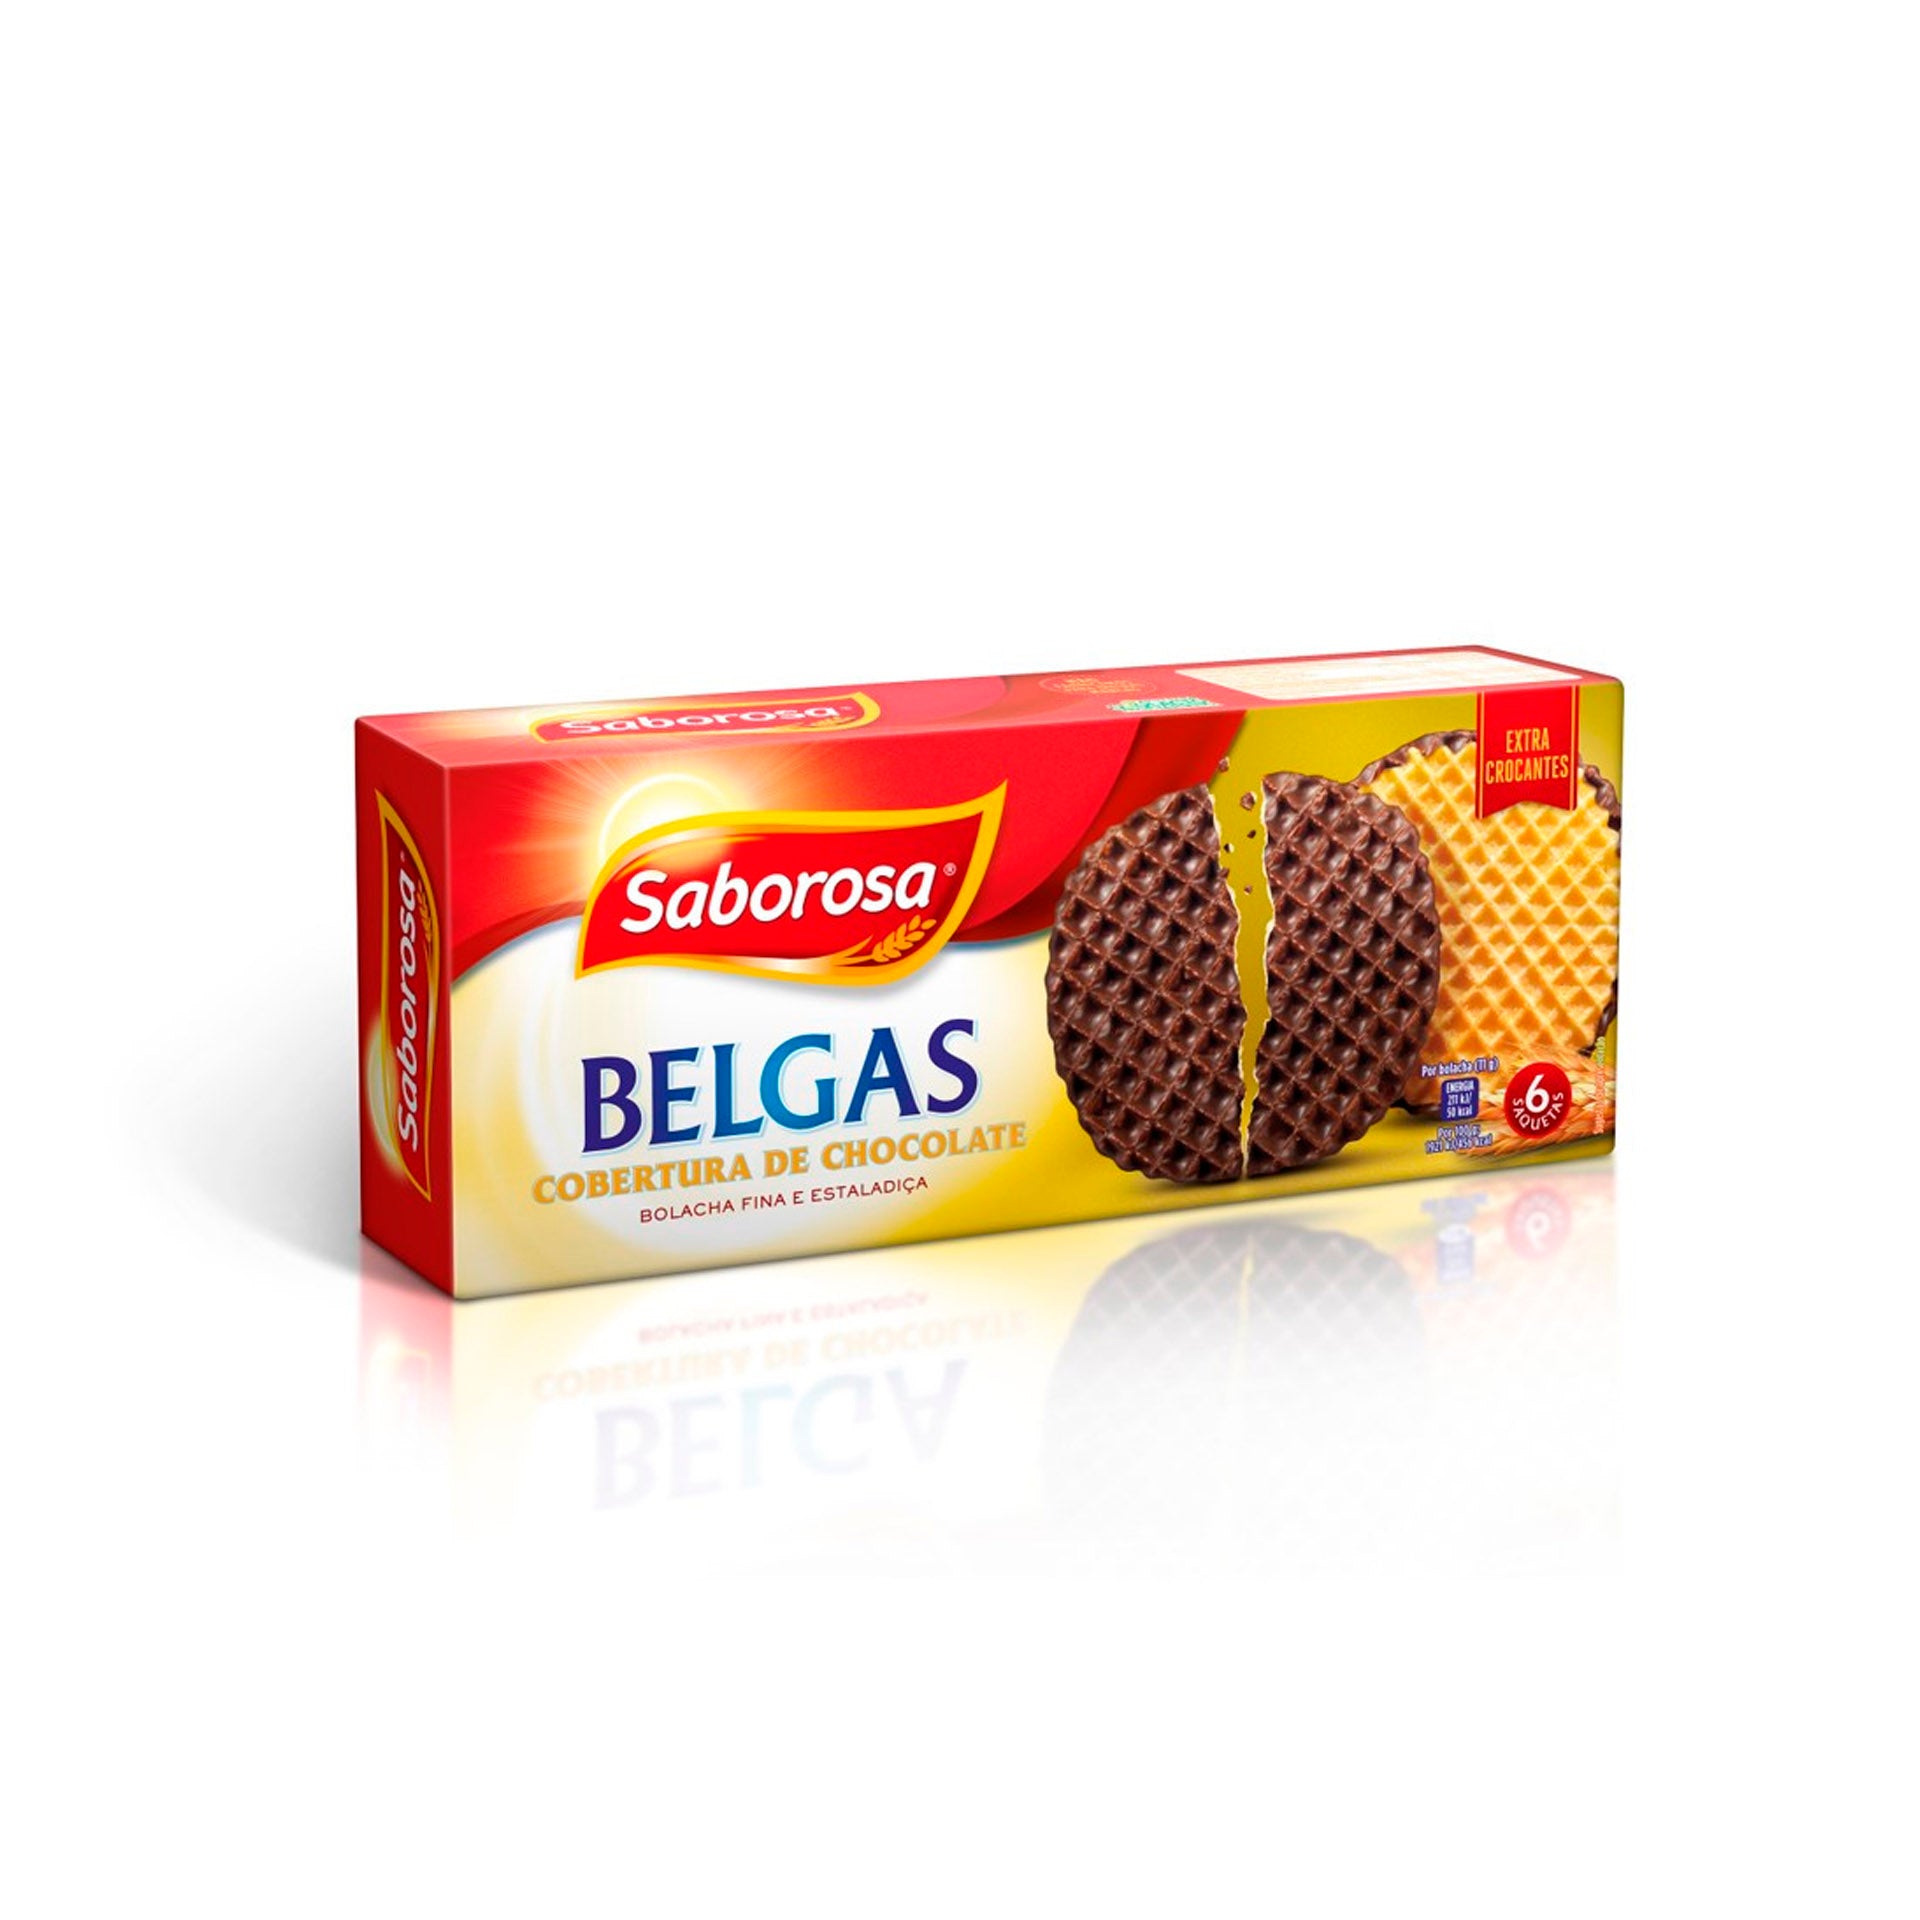 Saborosa Belgas Chocolate 198 gr - Pack 3 x 198 gr